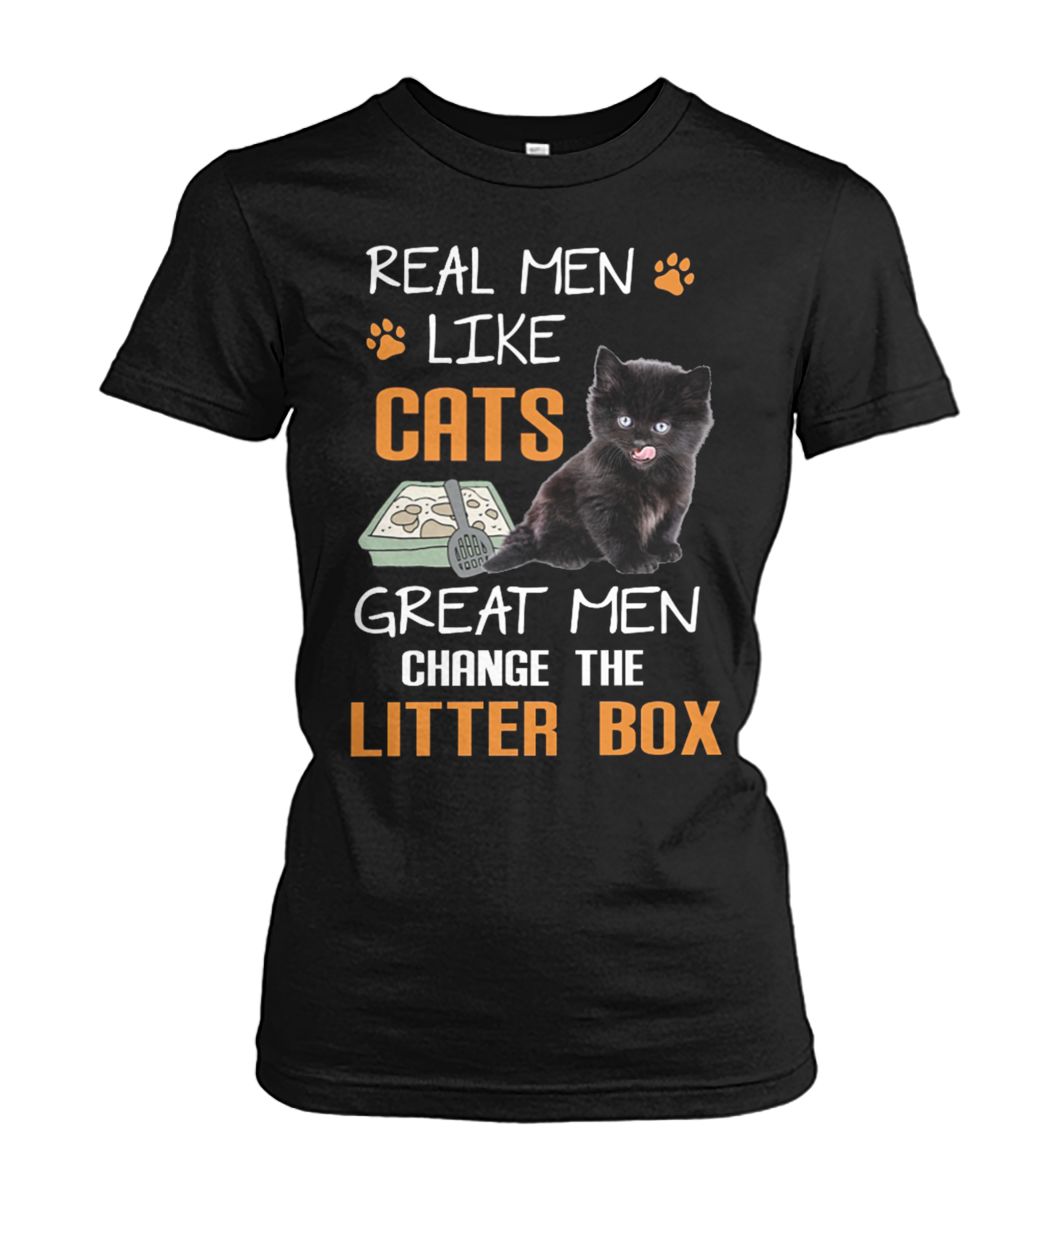 Real men like cats great men change litter box women's crew tee